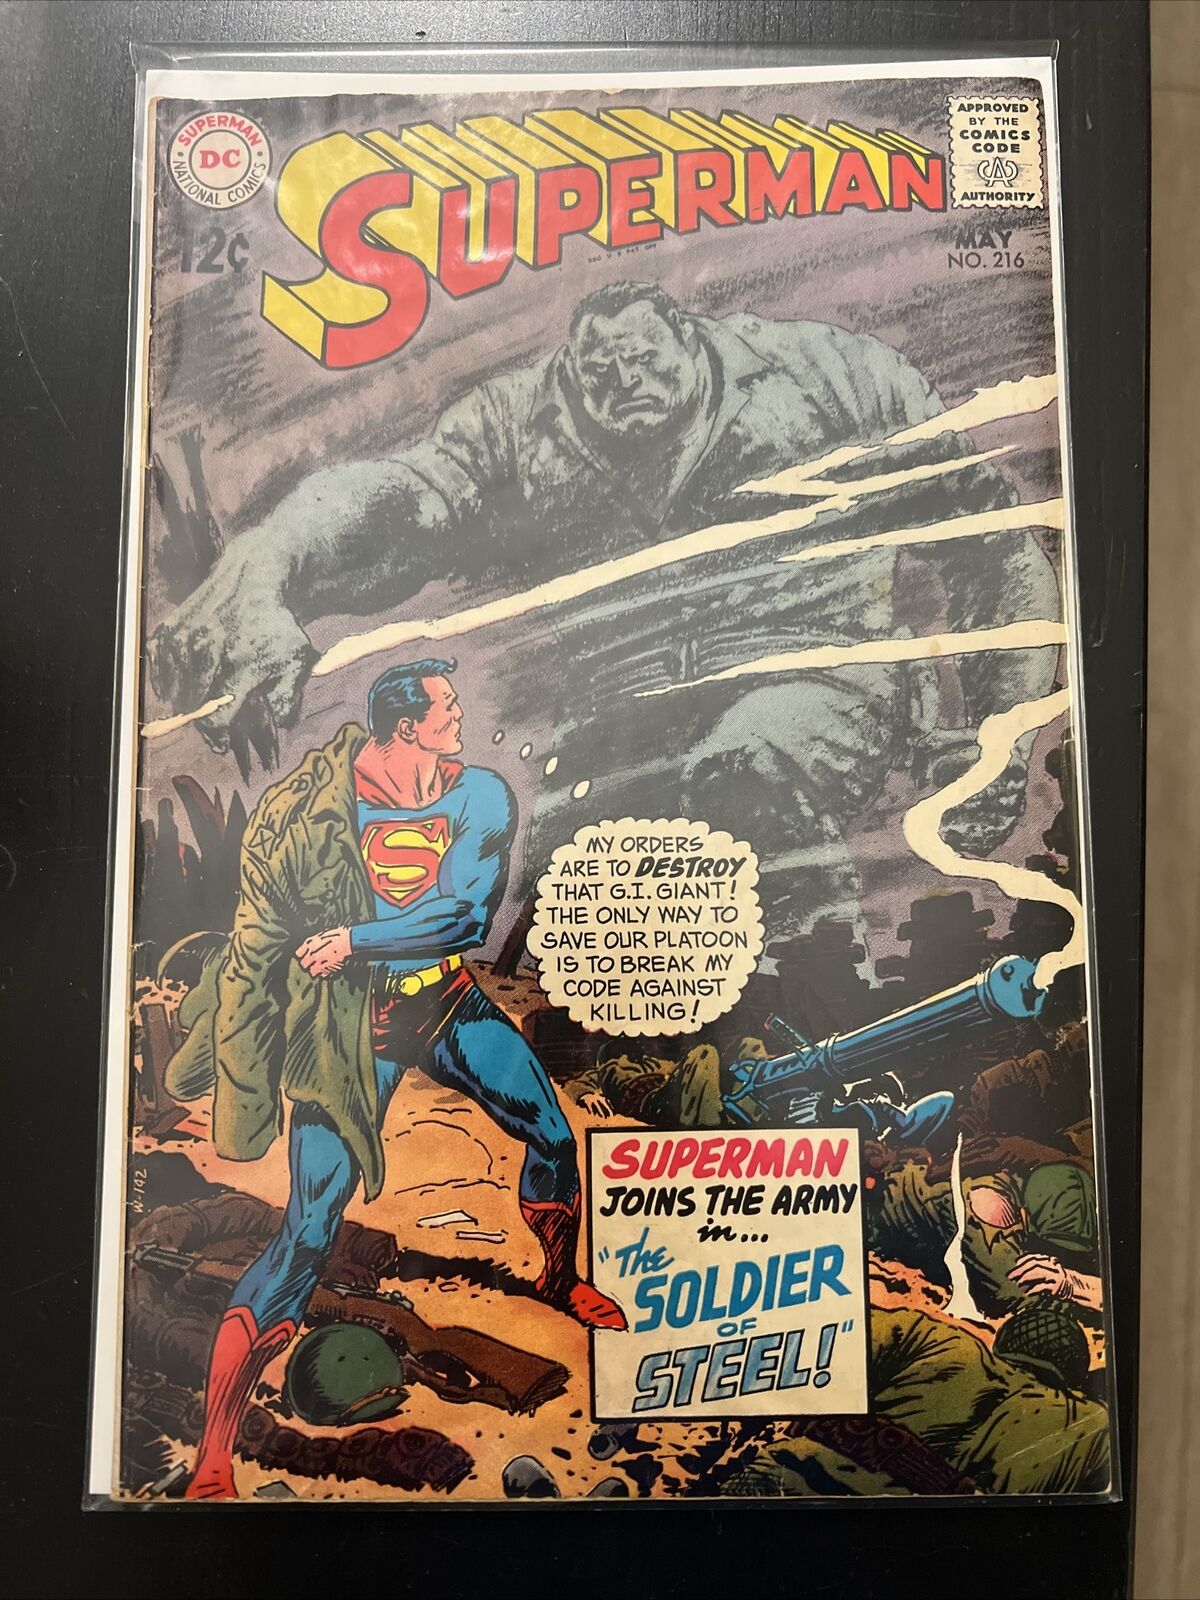 Superman #216 12¢ -  Superman in Vietnam Joe Kubert cover (May 1969)